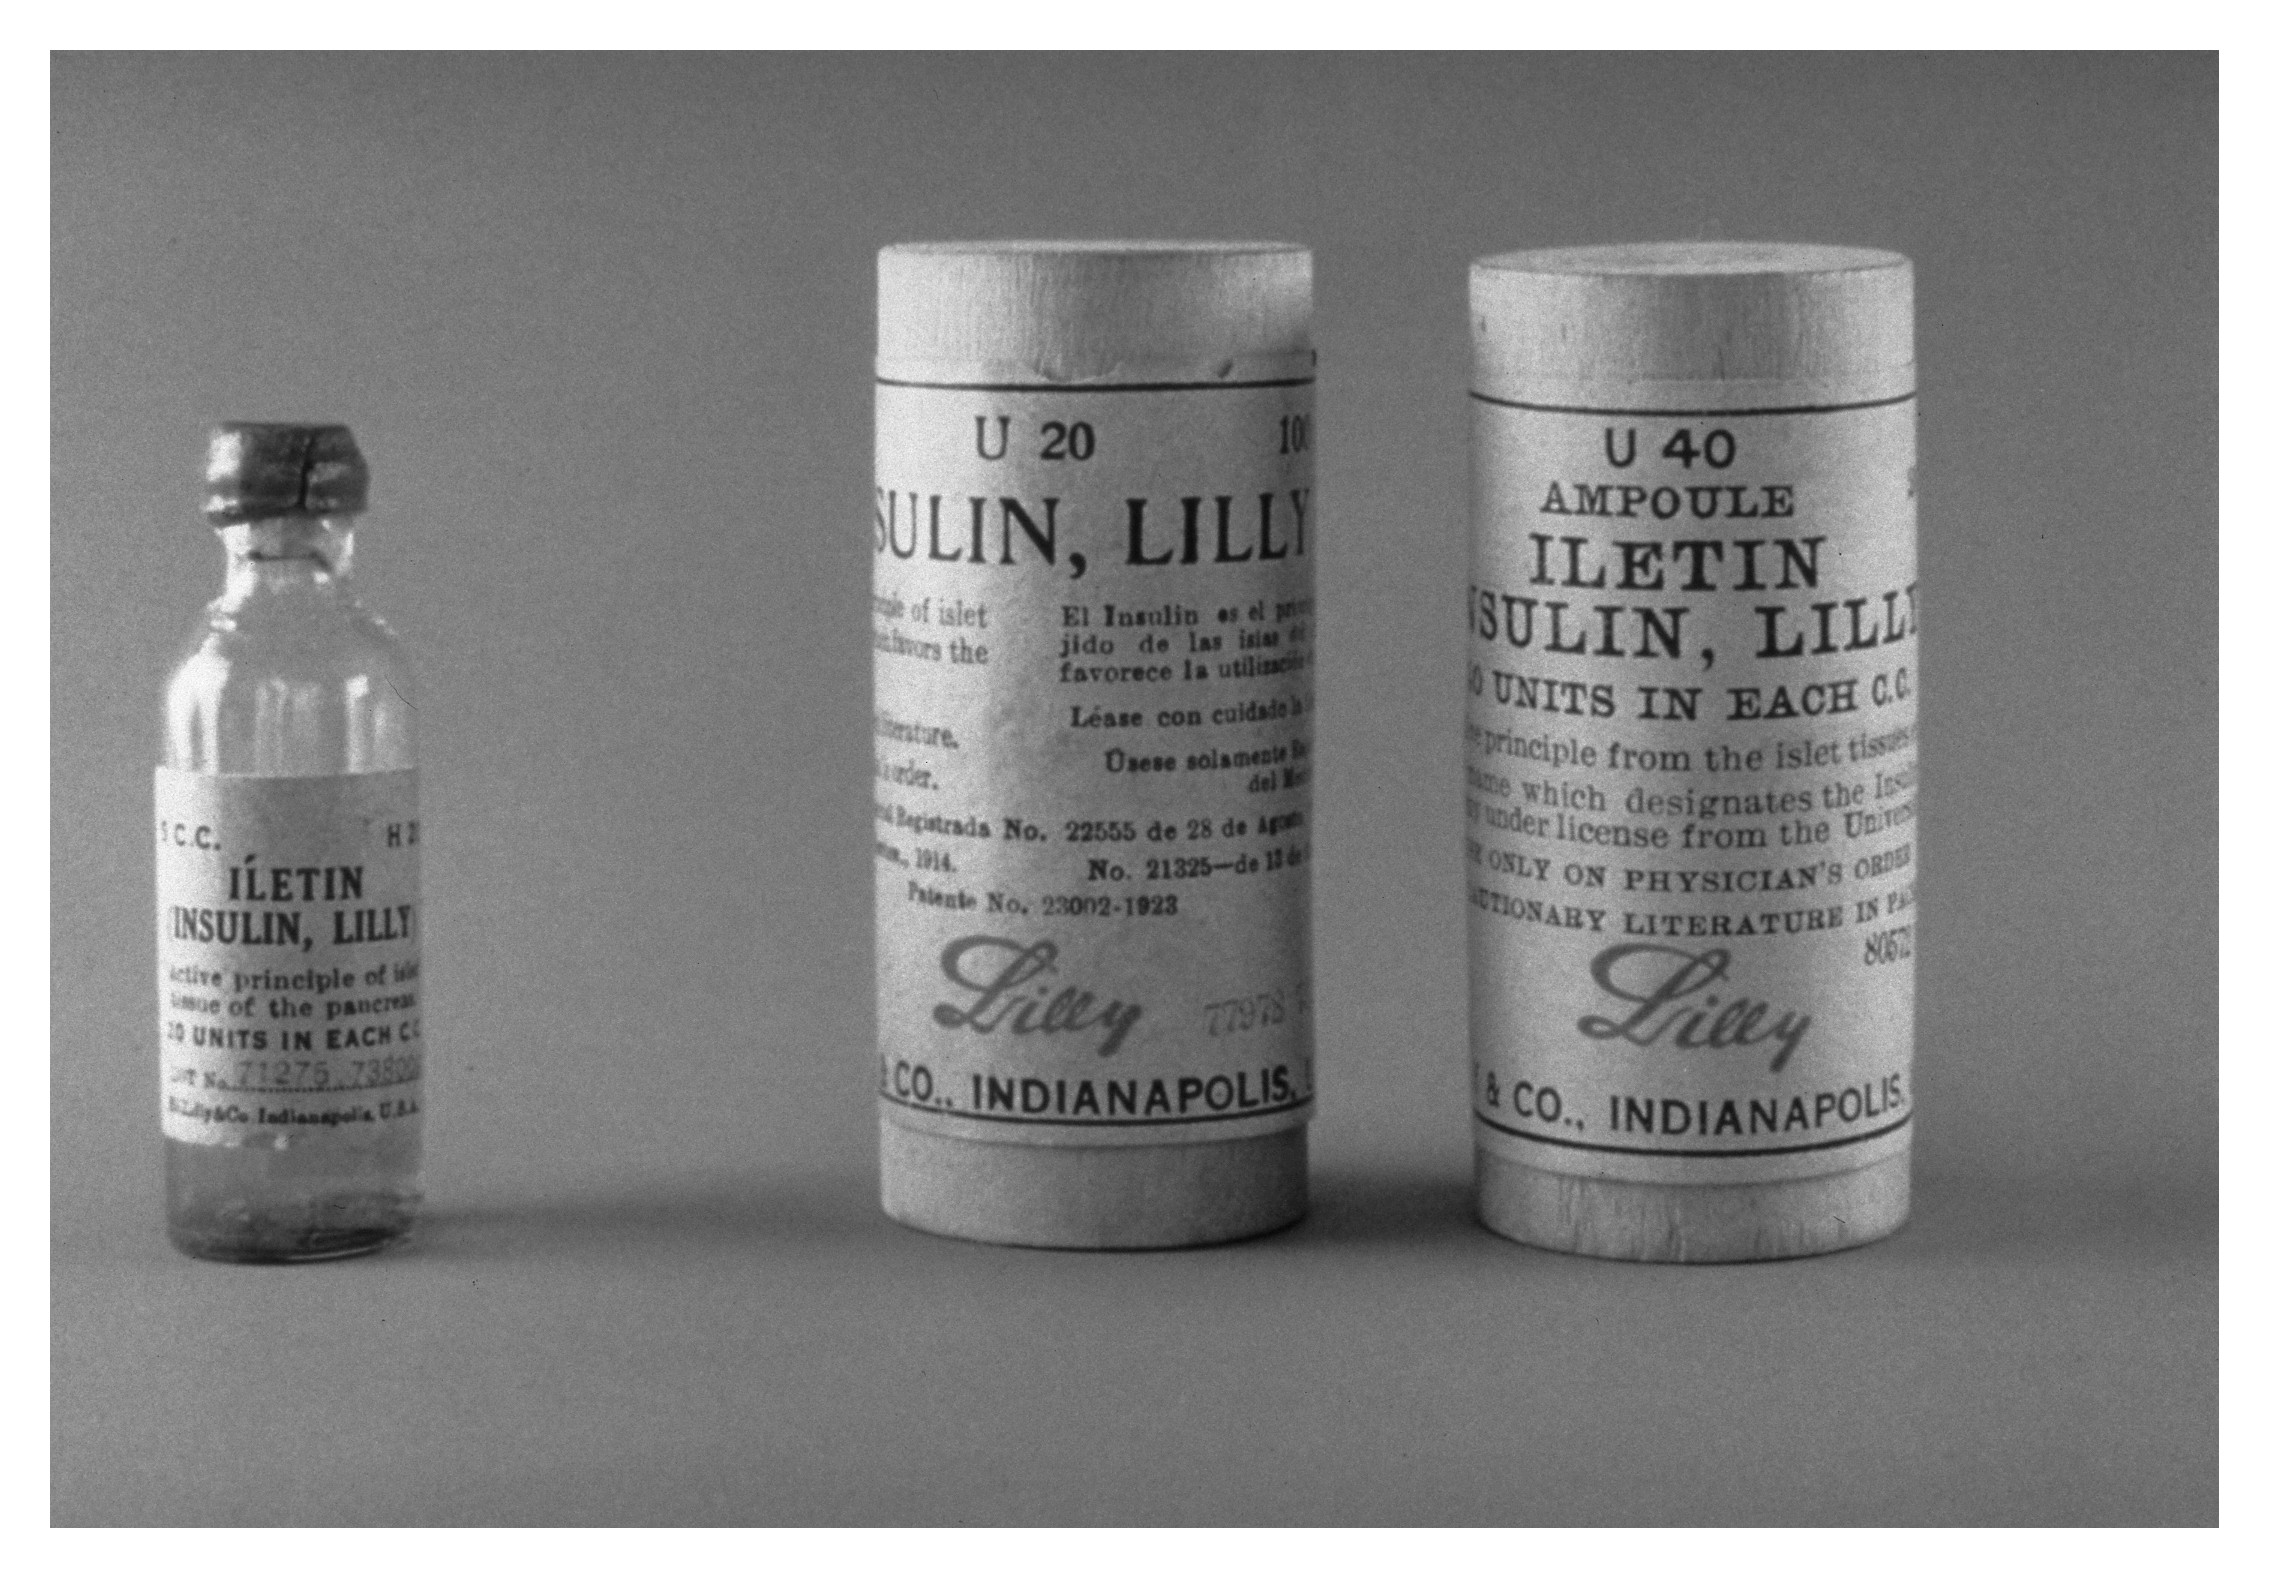 1923_Iletin (insulin, Lilly) Packaging.jpg.jpg